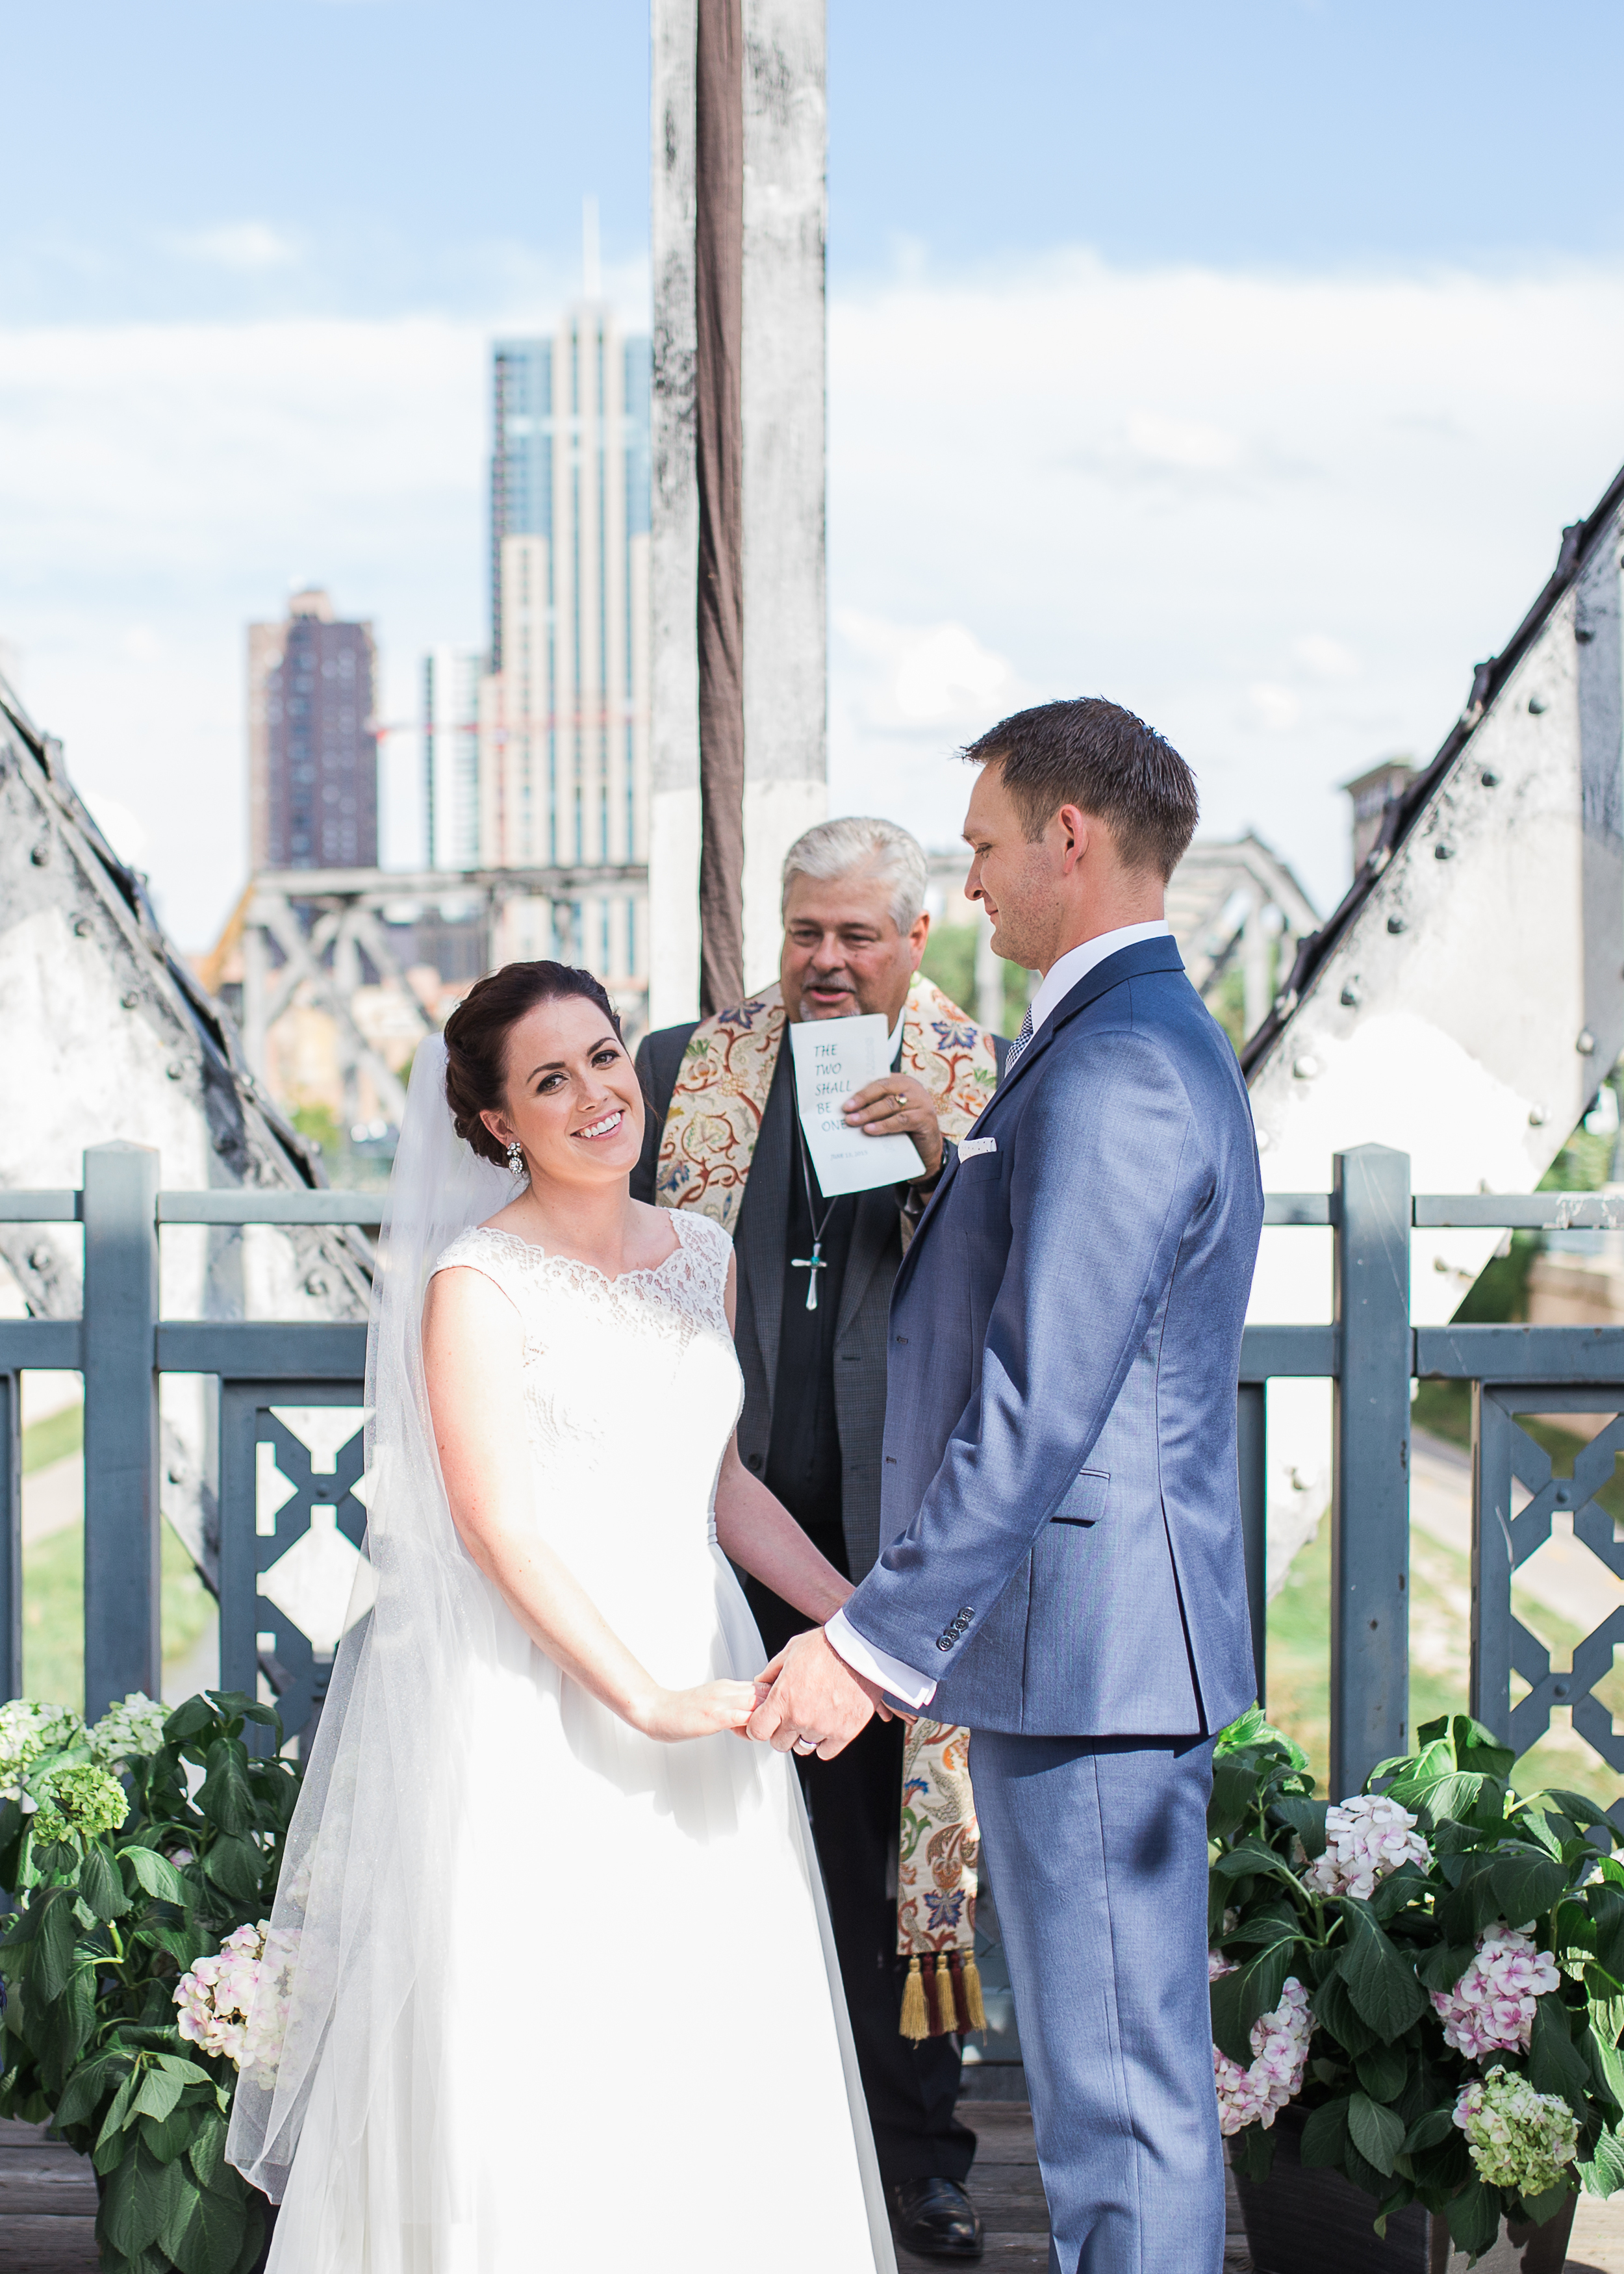 Coohills Wedding Photographer - bride and groom during ceremony on bridge